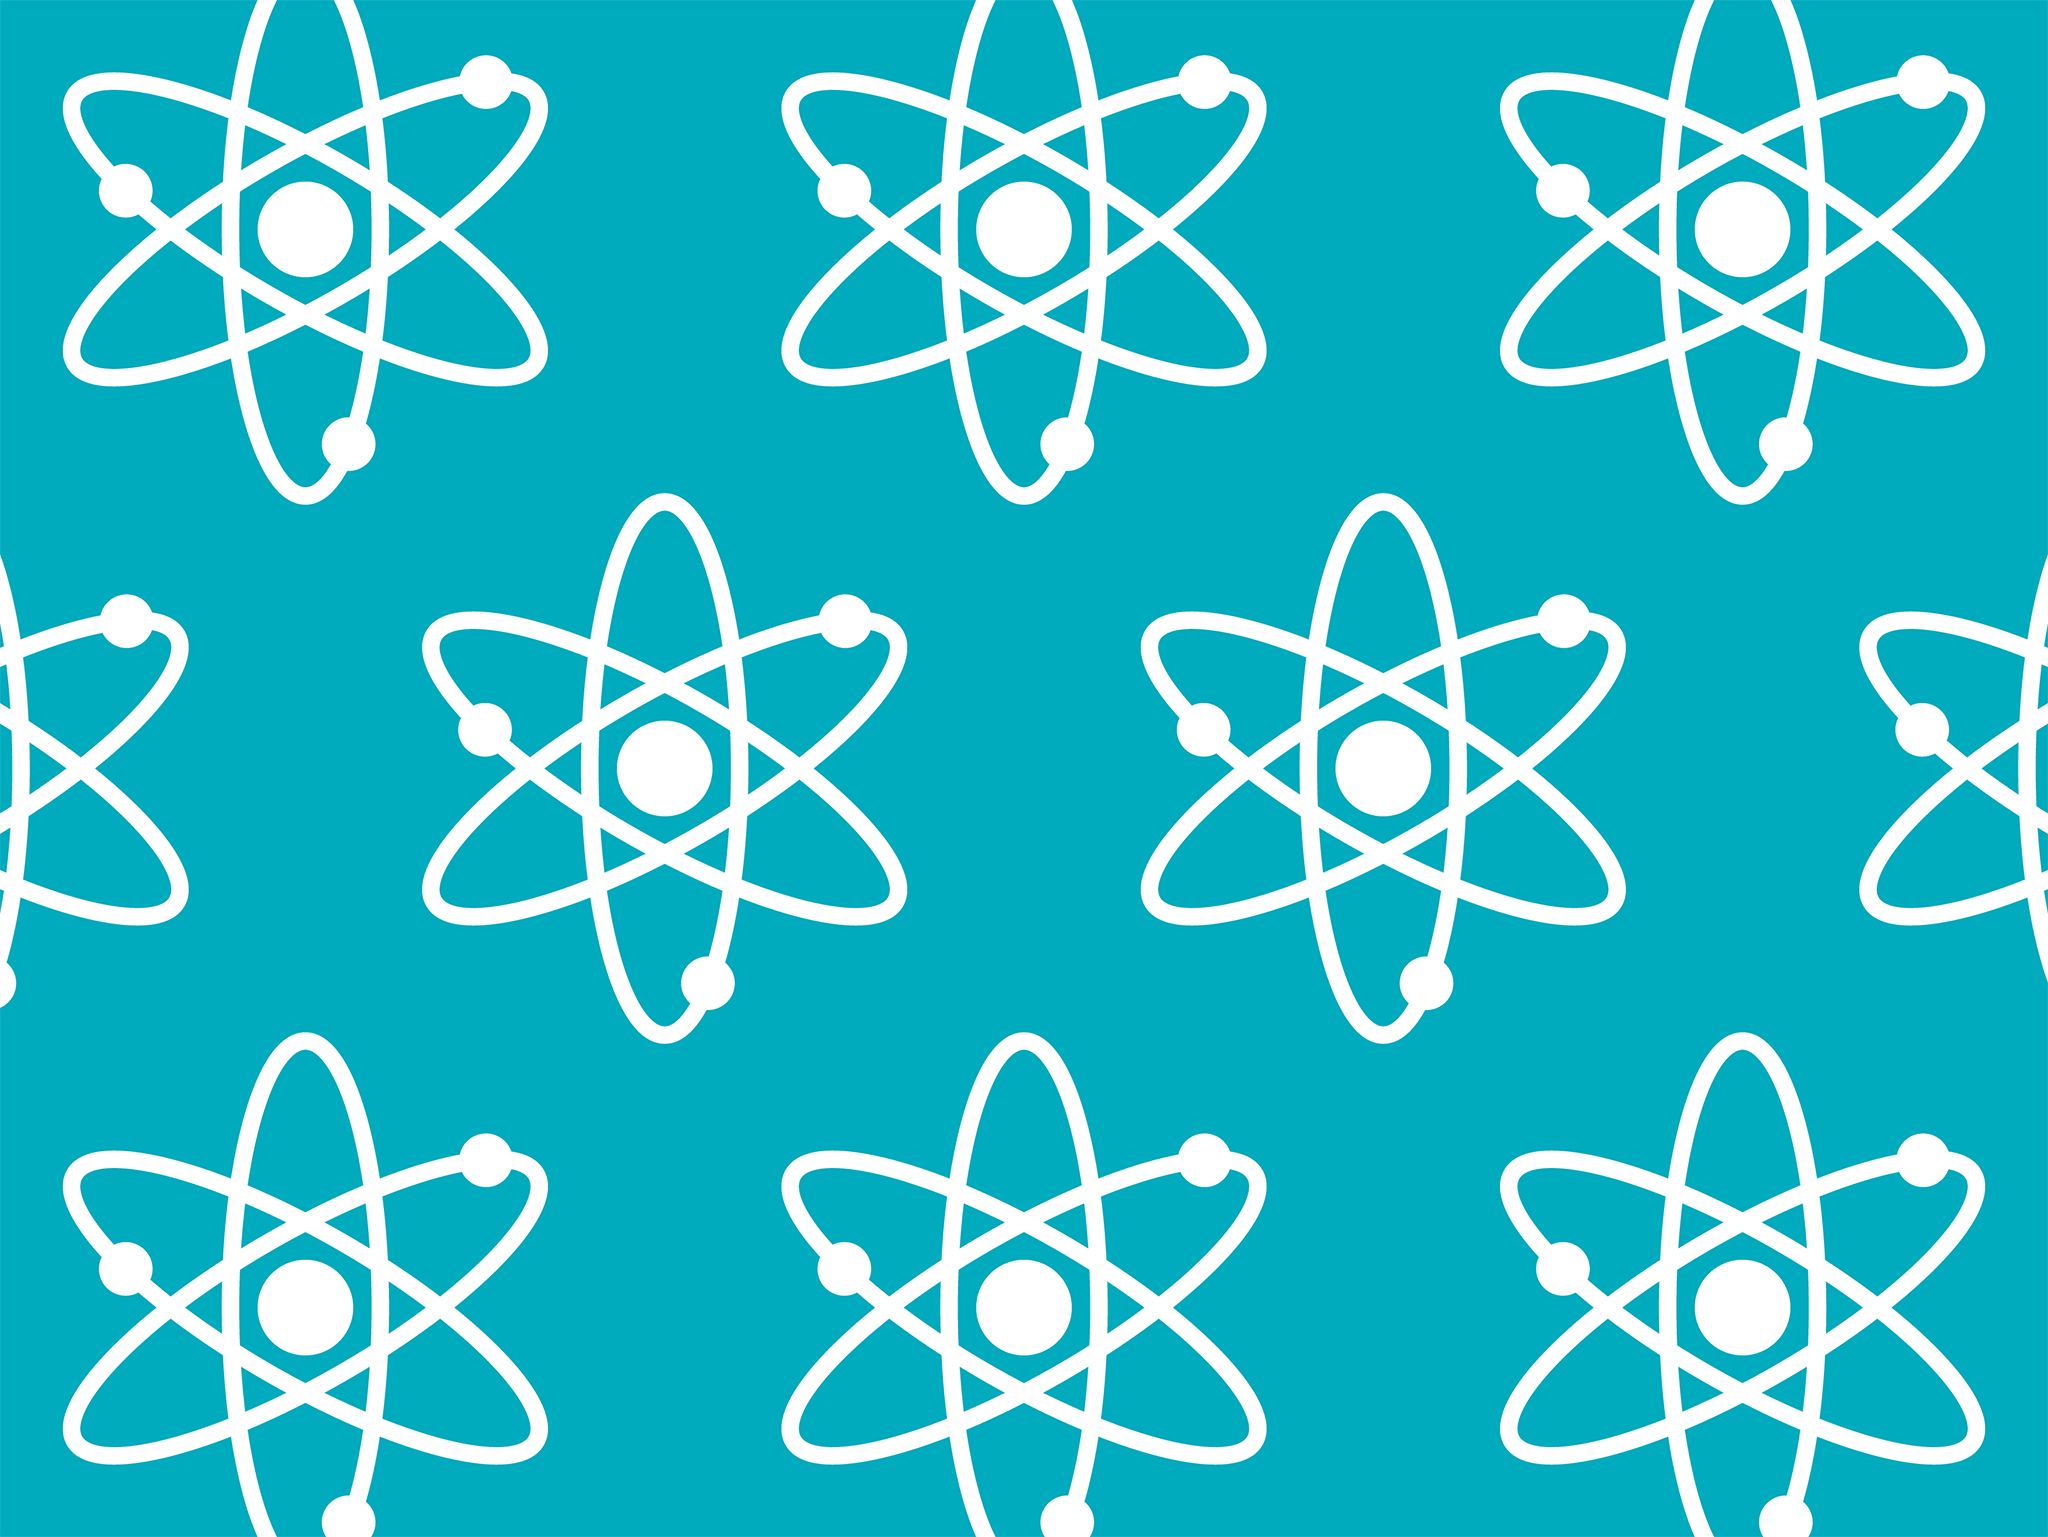 Pattern of atom icons.